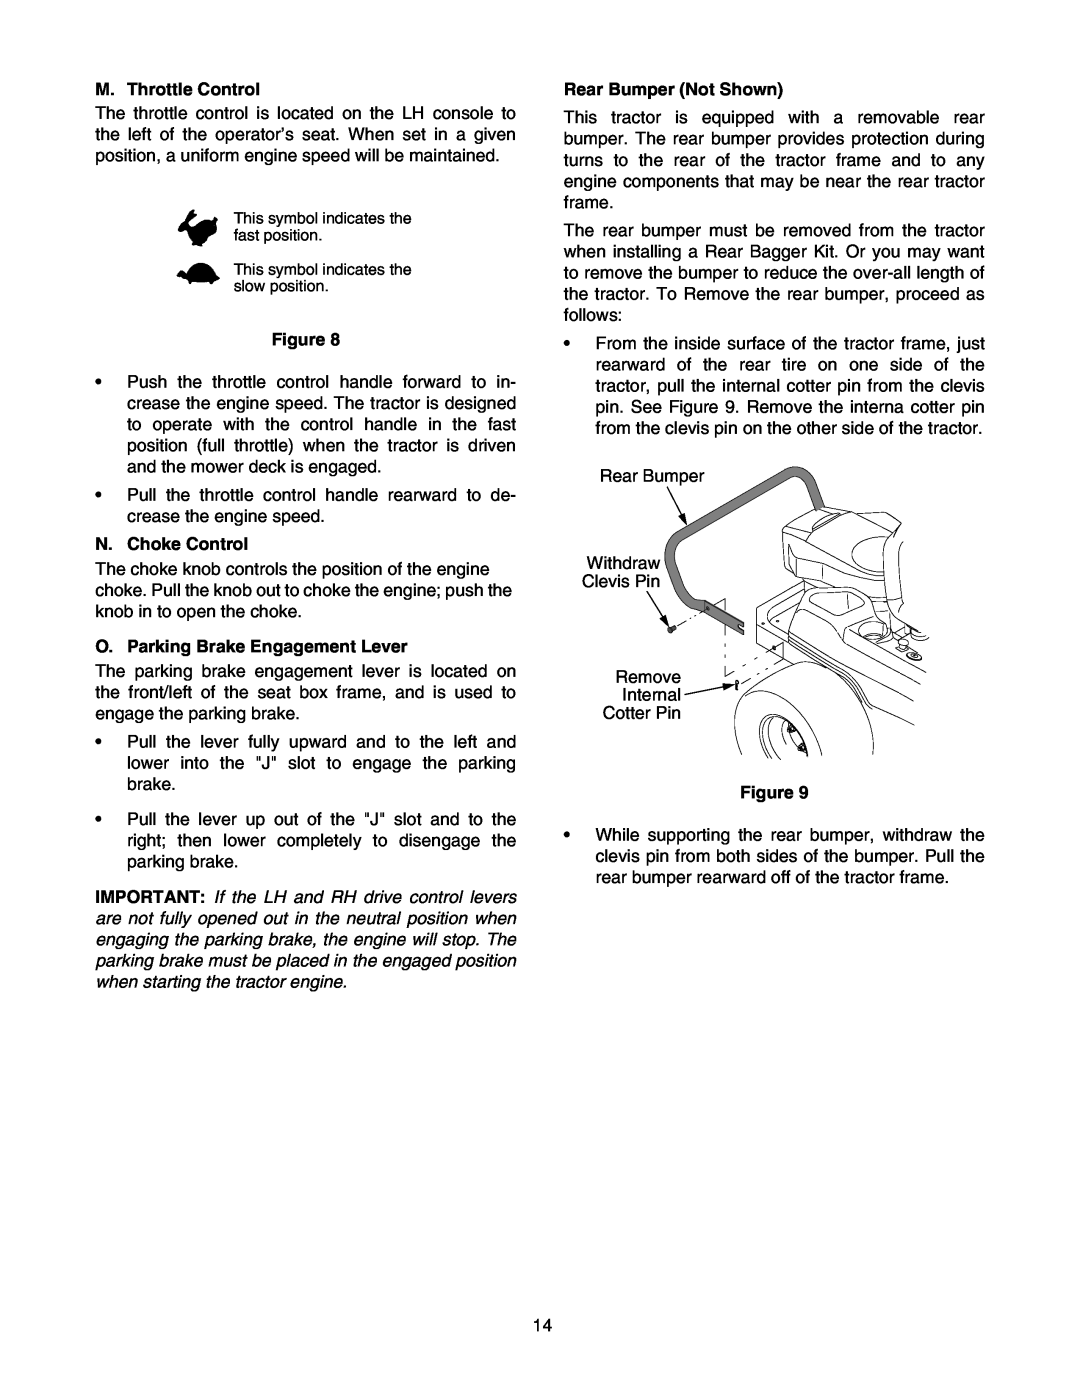 Troy-Bilt RZT 50 manual M. Throttle Control, N. Choke Control, O. Parking Brake Engagement Lever, Rear Bumper Not Shown 